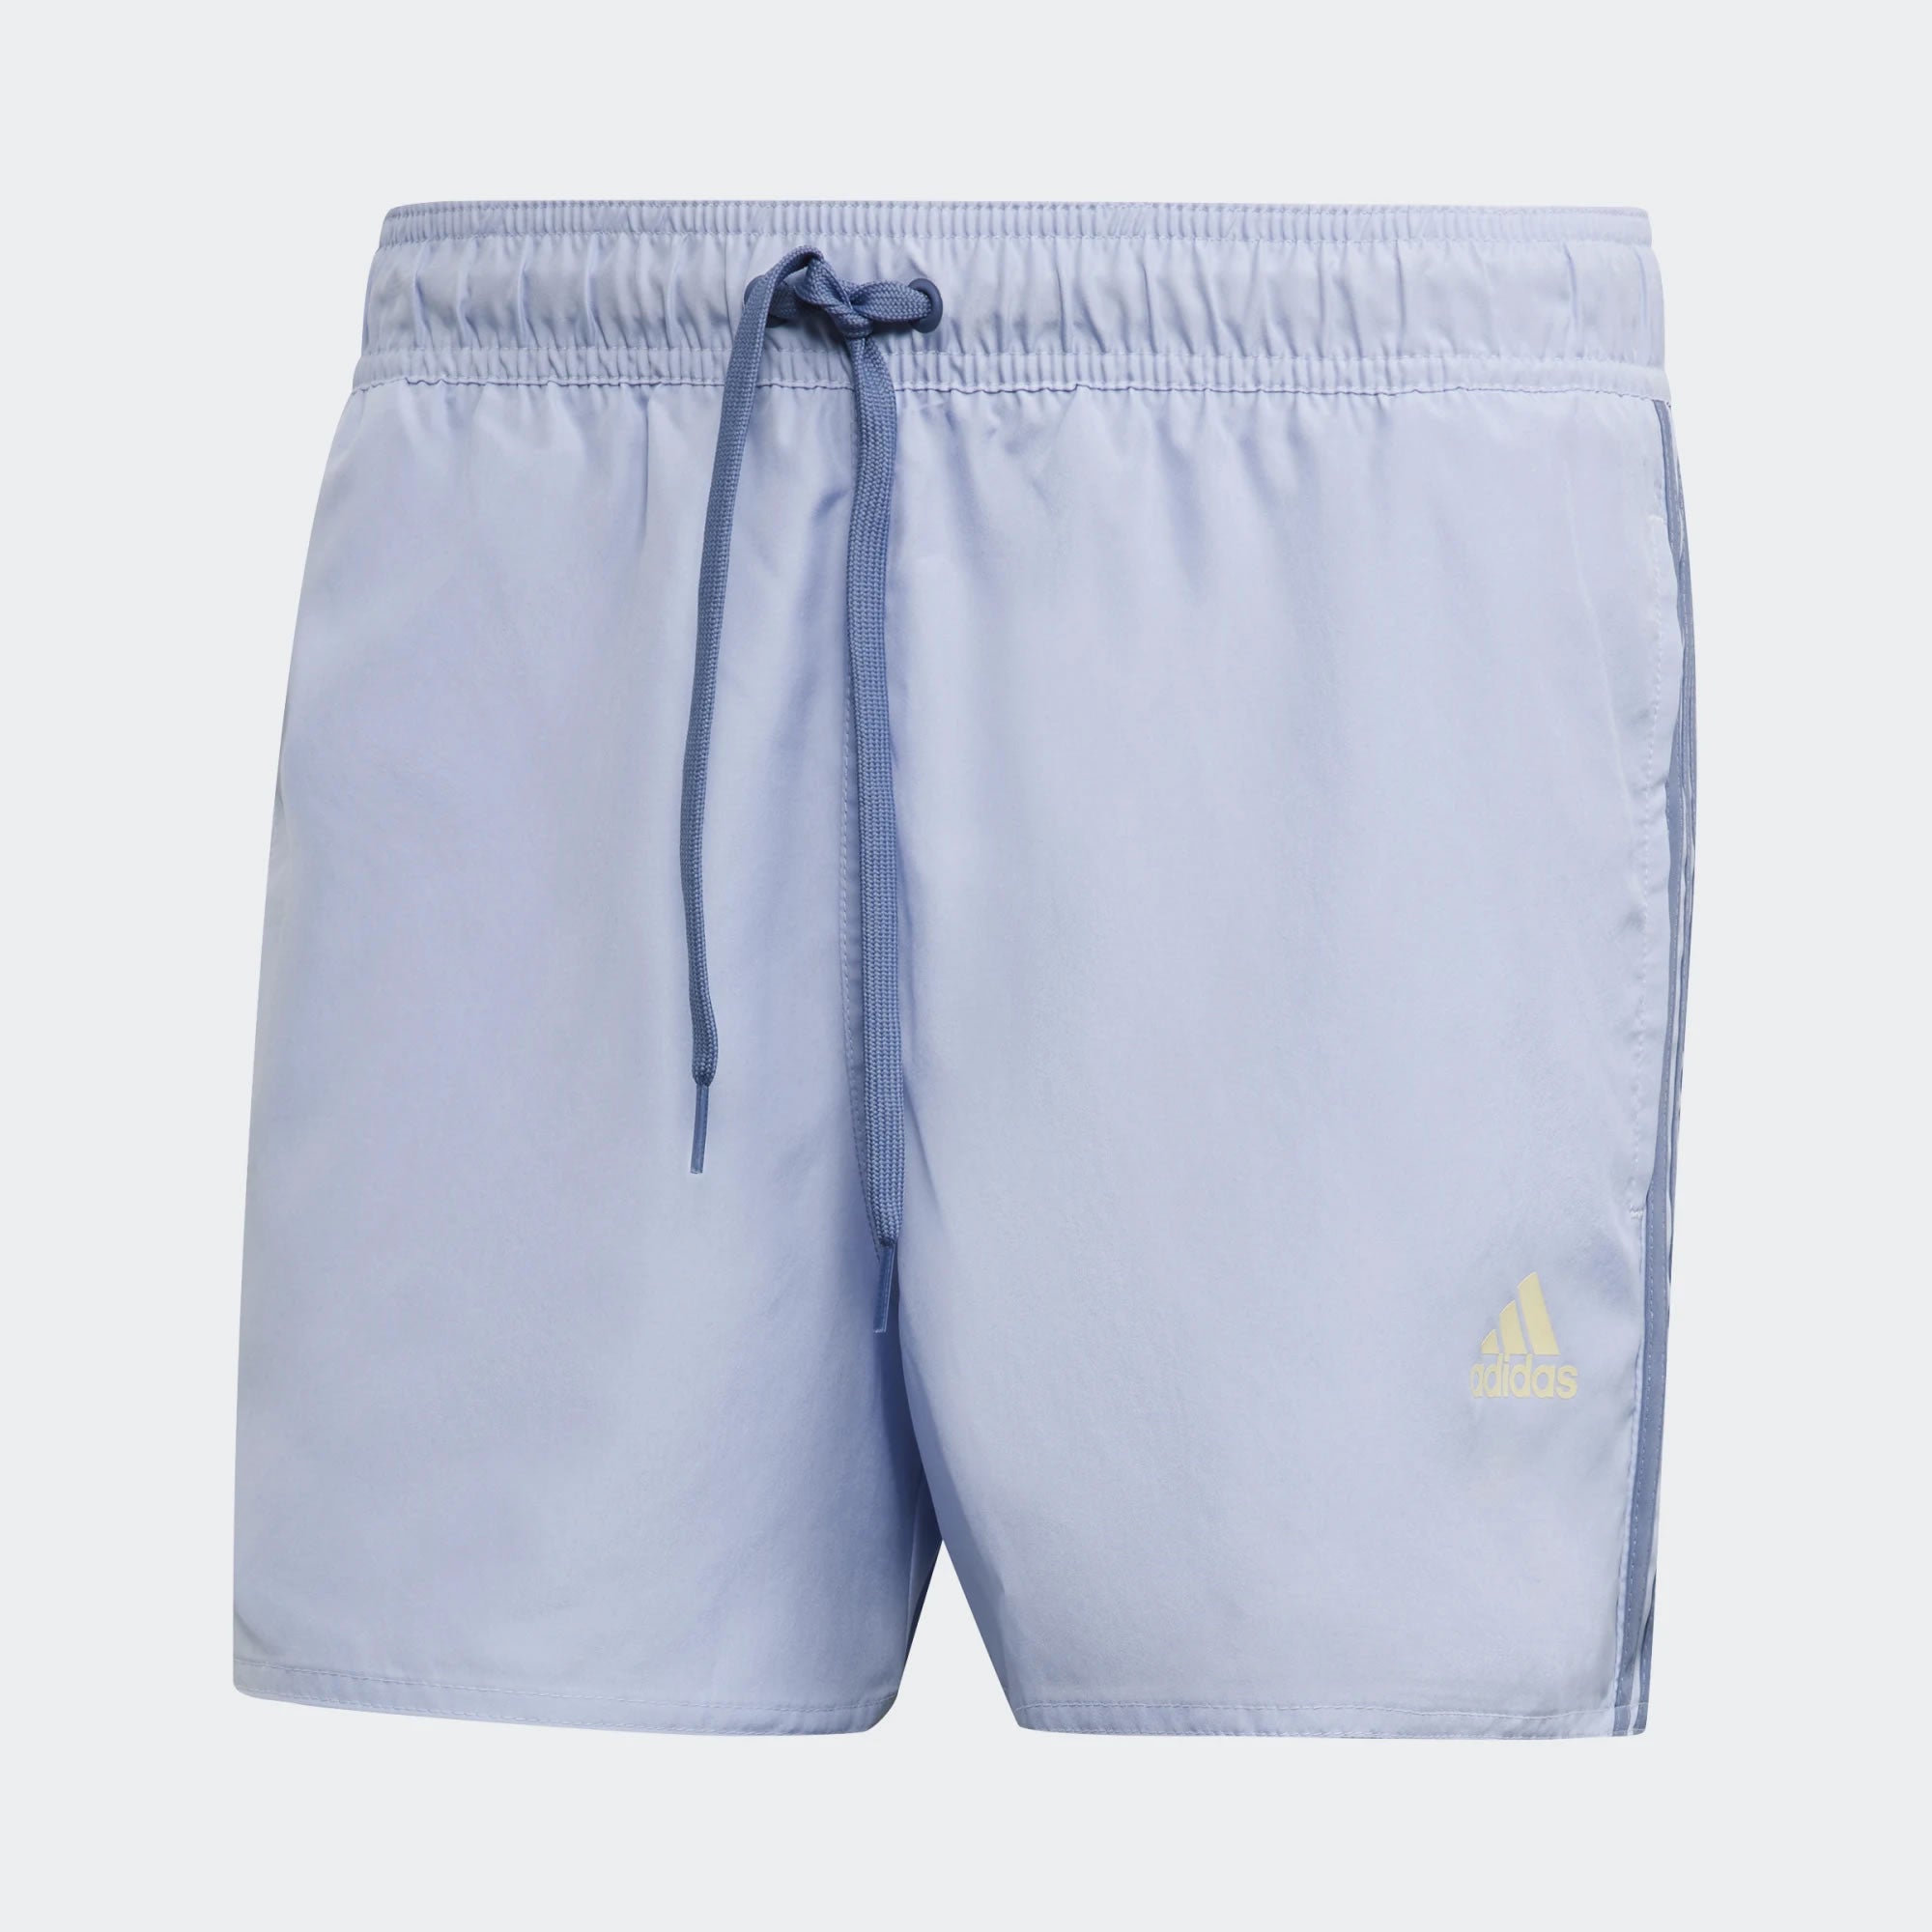 tradesports.co.uk Adidas Men's Classic 3 Stripe Swim Shorts - Violet